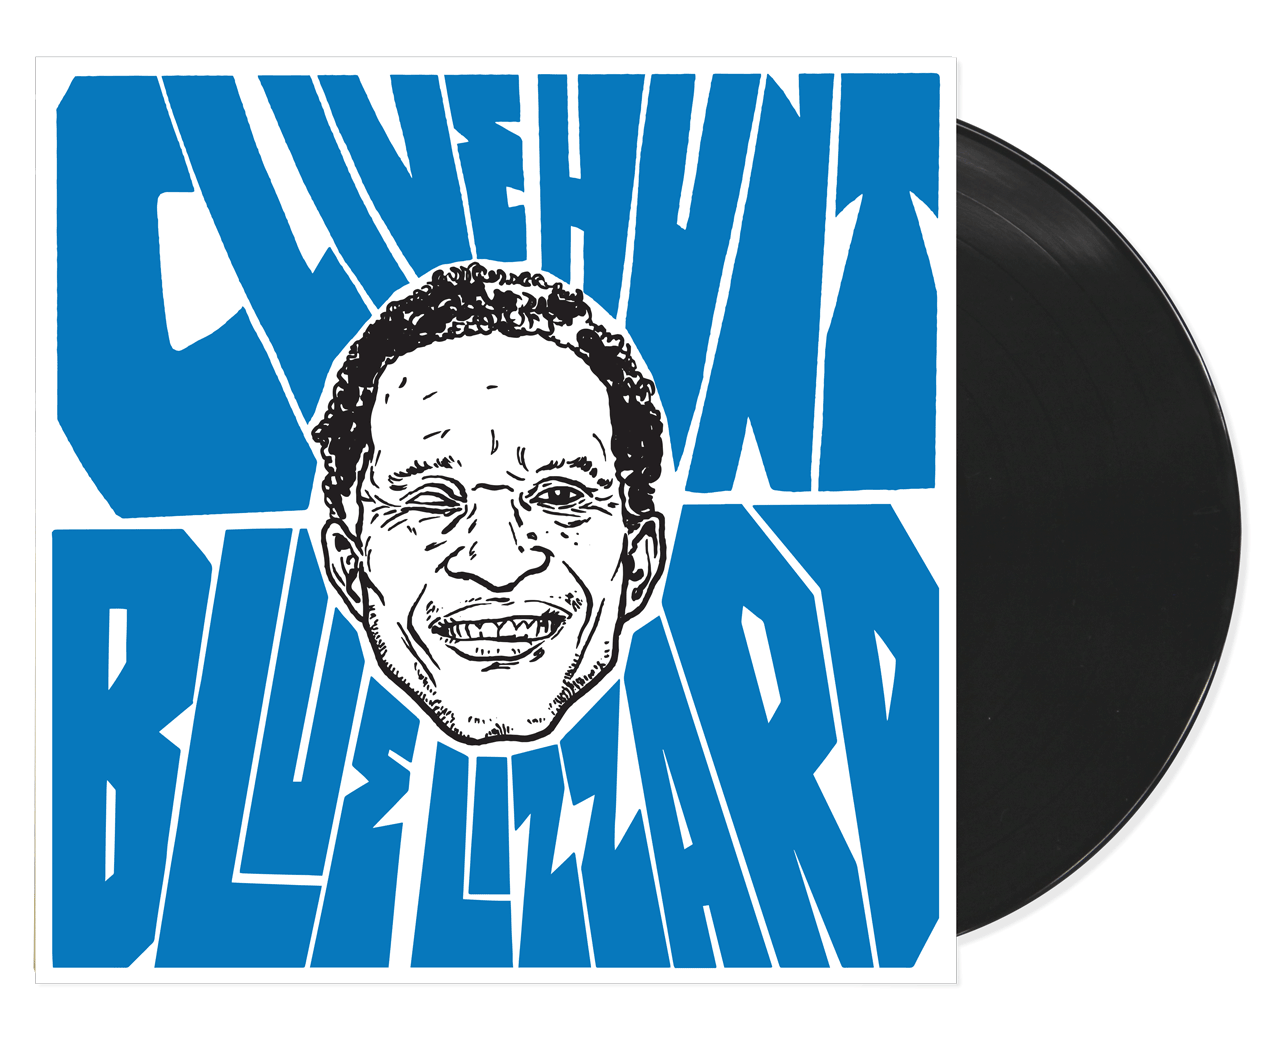 Blue Lizzard (LP Vinyl)